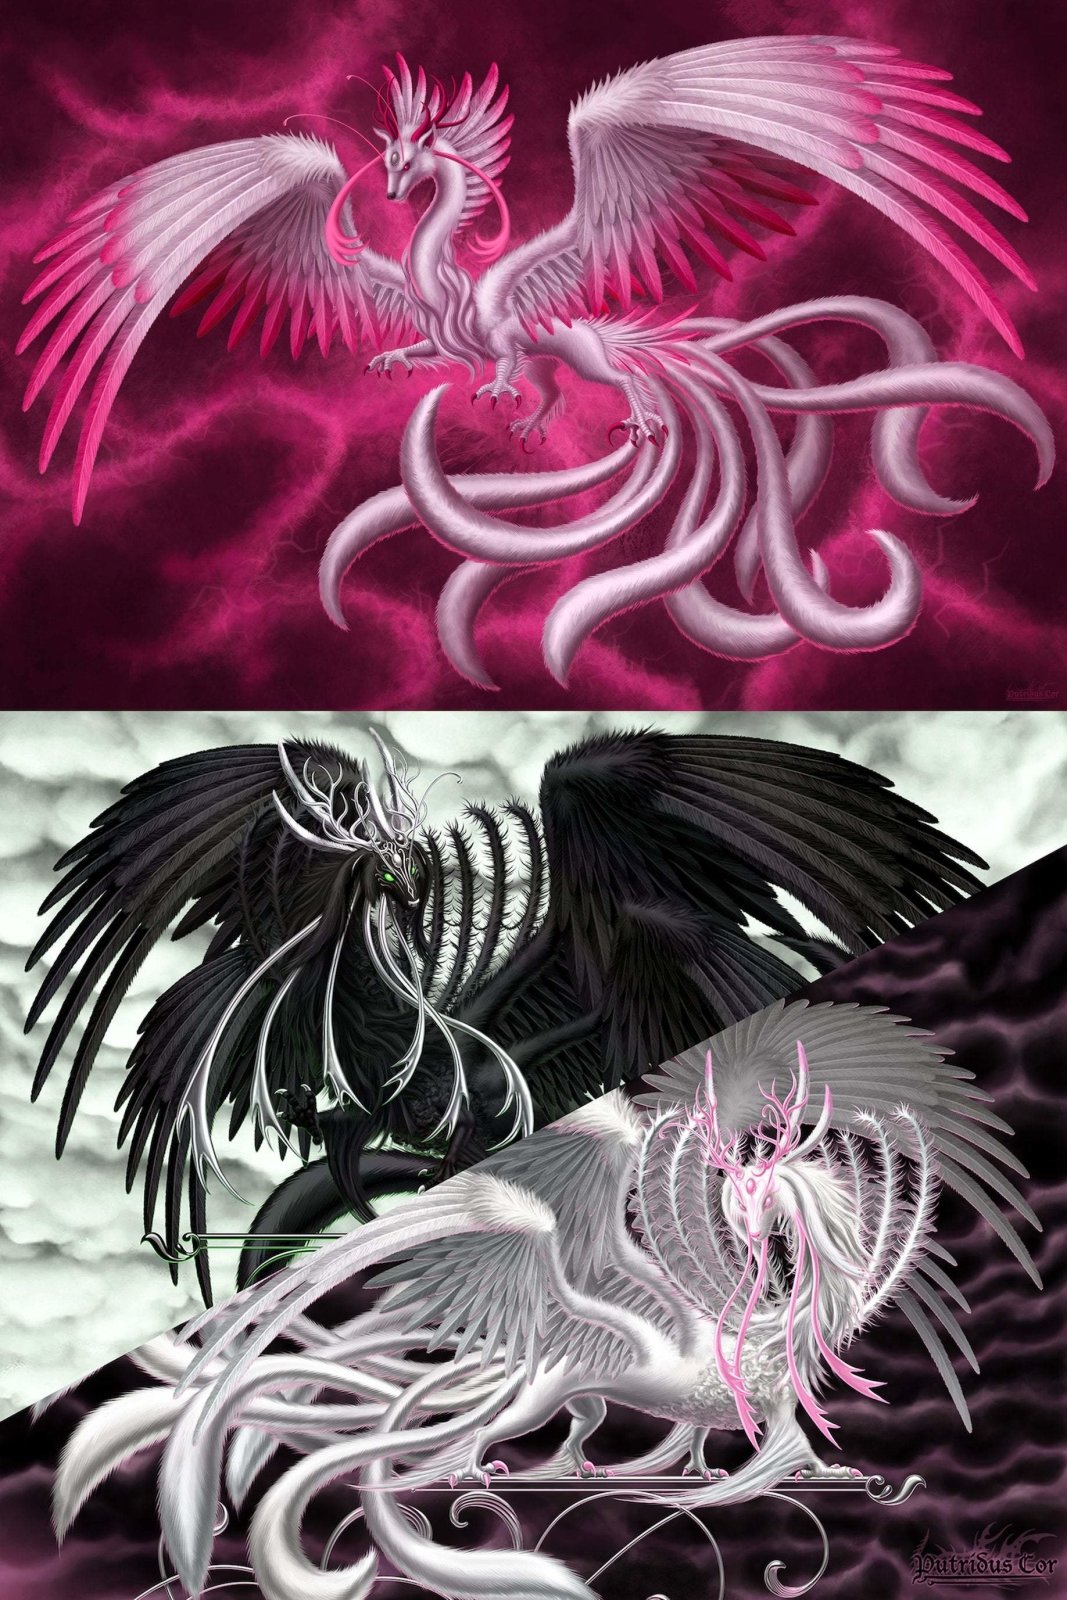 Flight Rising Fan Art, Custom Dragon Commissions. Personalized Fantasy Illustration. Design your favorite creature - Abysm